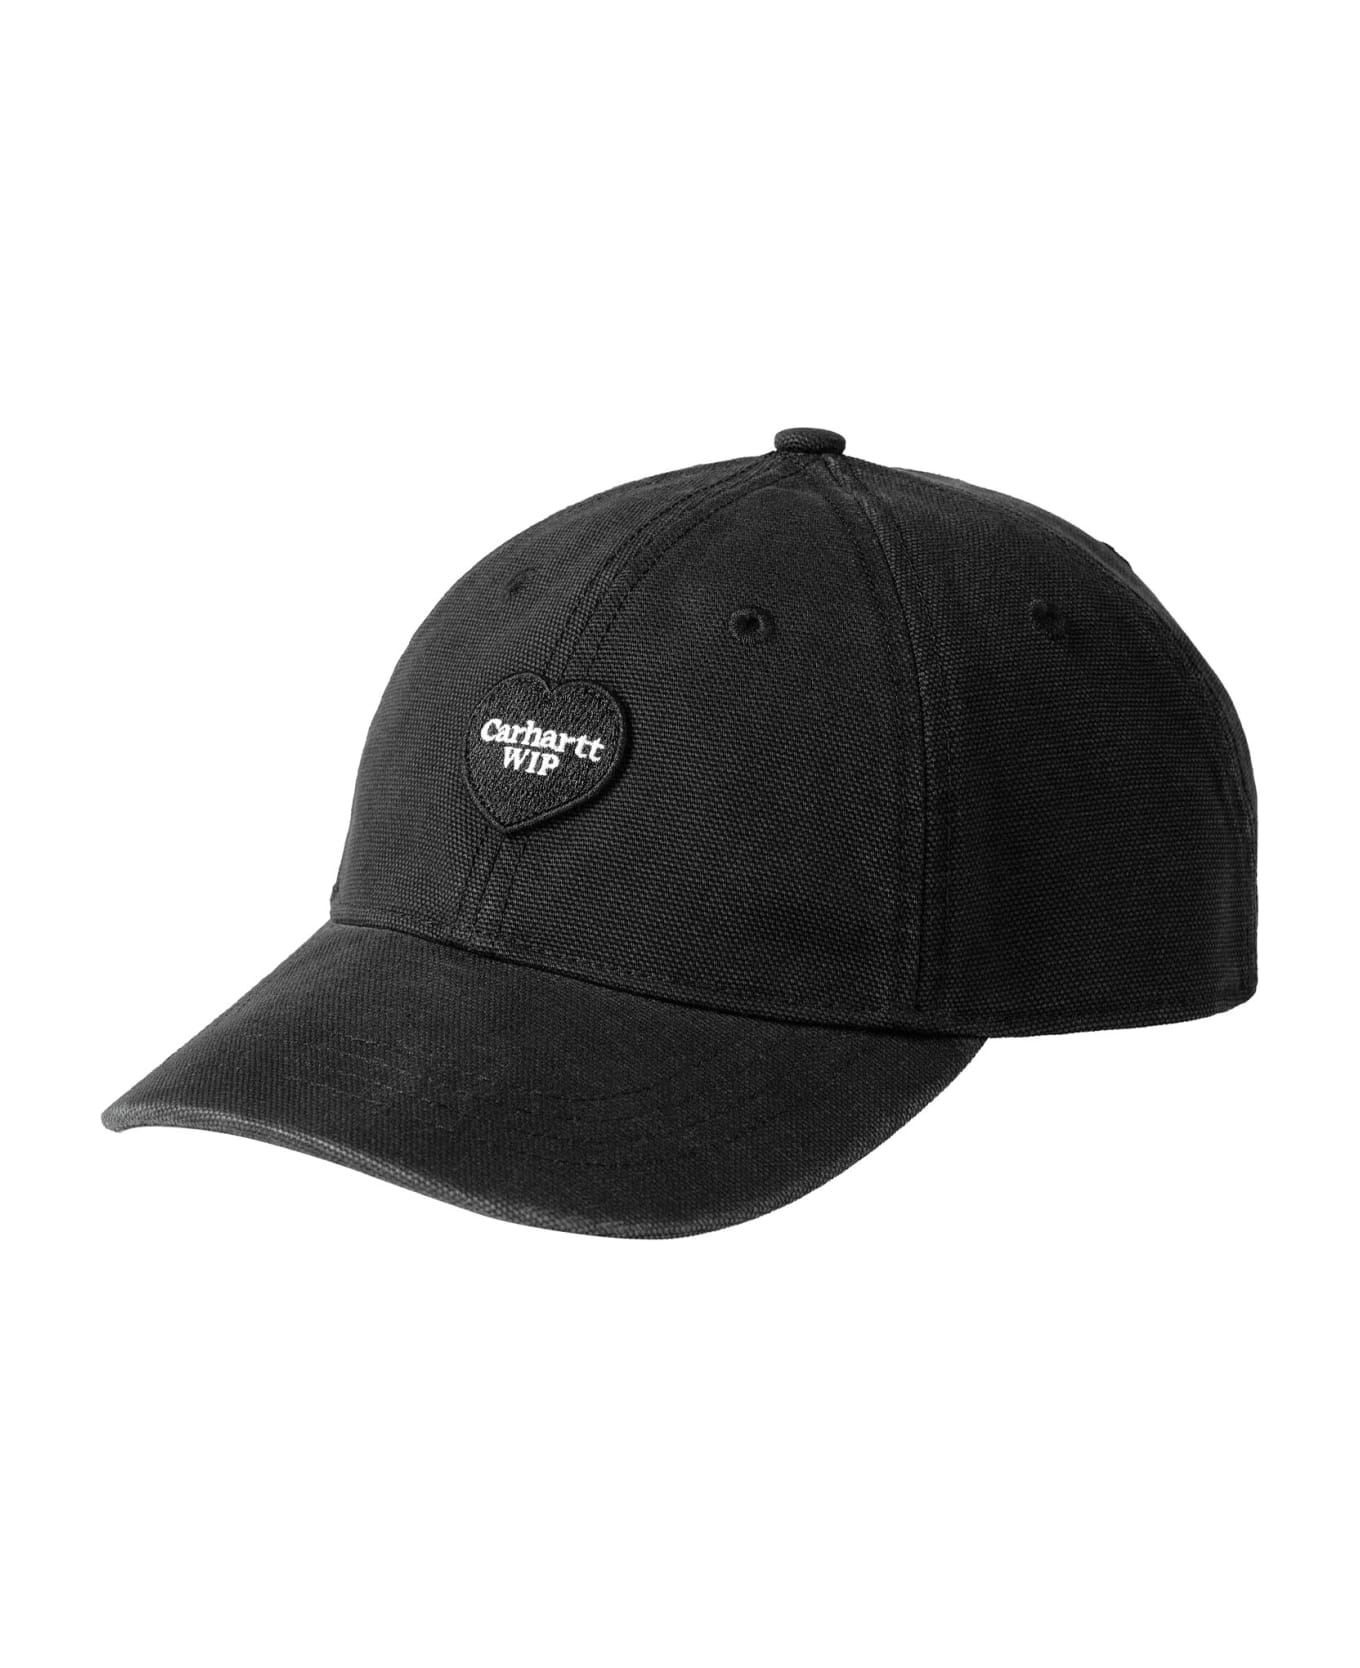 Carhartt Black Cotton Baseball Cap - Black